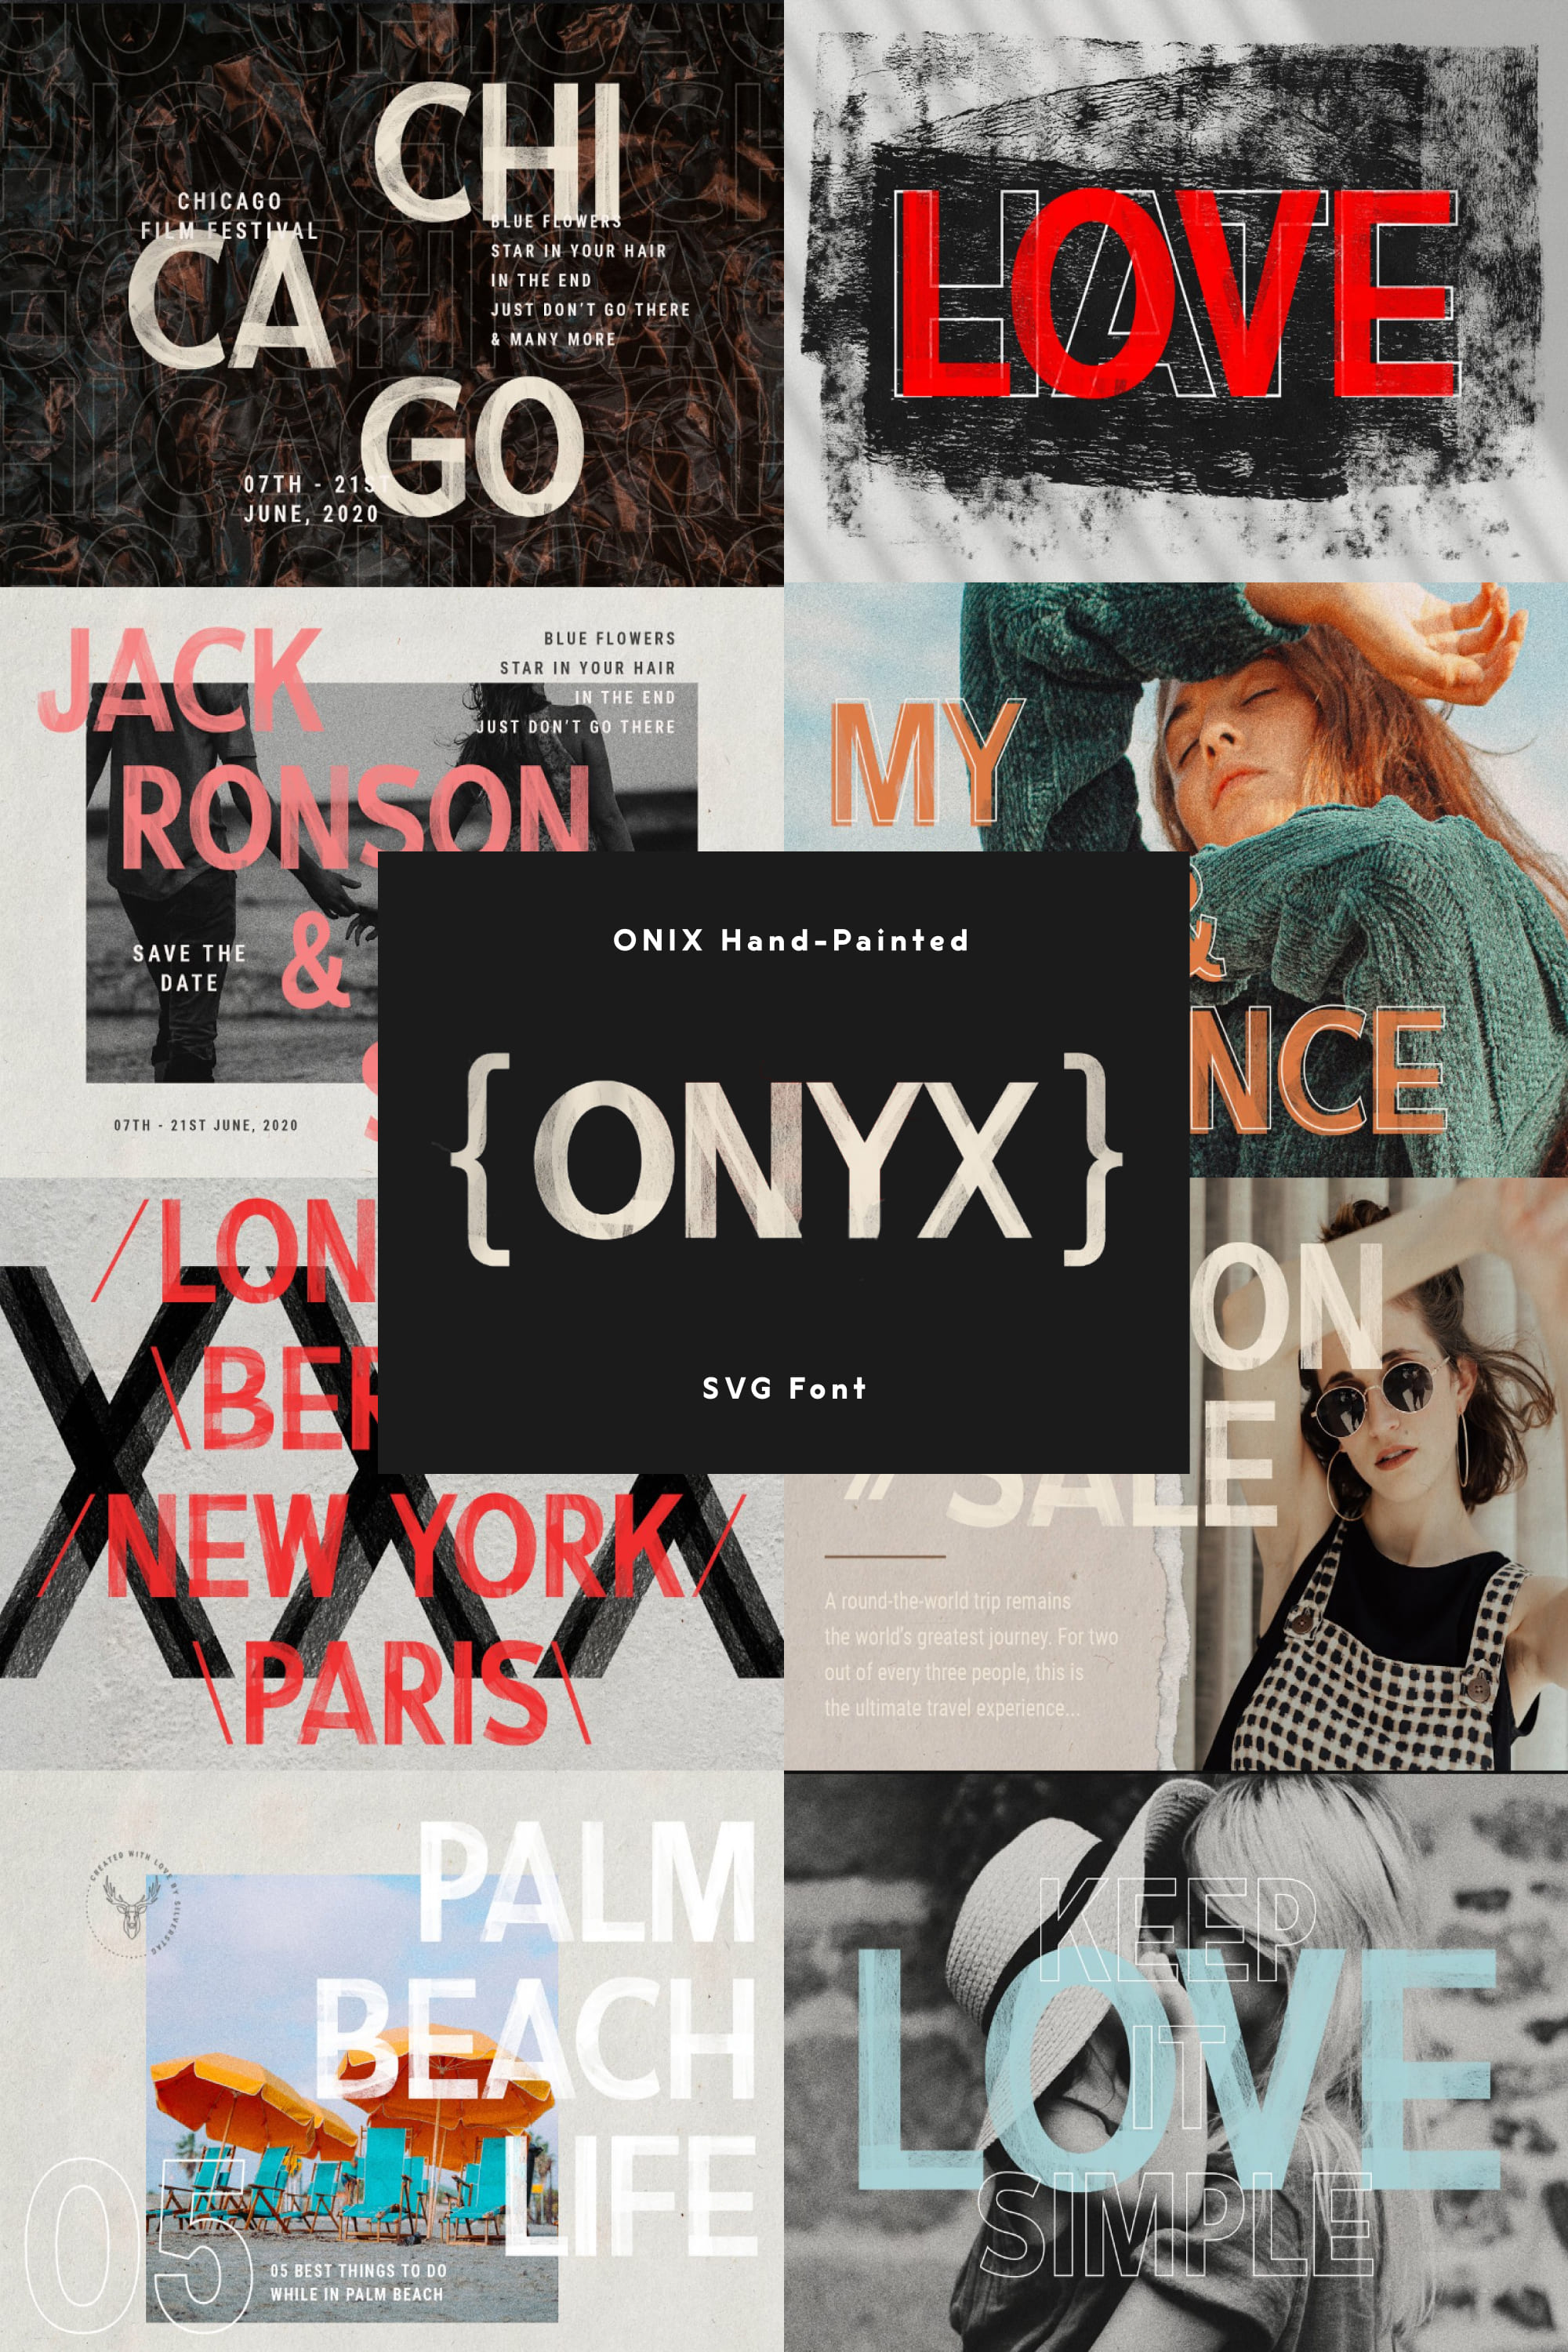 35 off Onix Hand Painted SVG Font Pinterest.